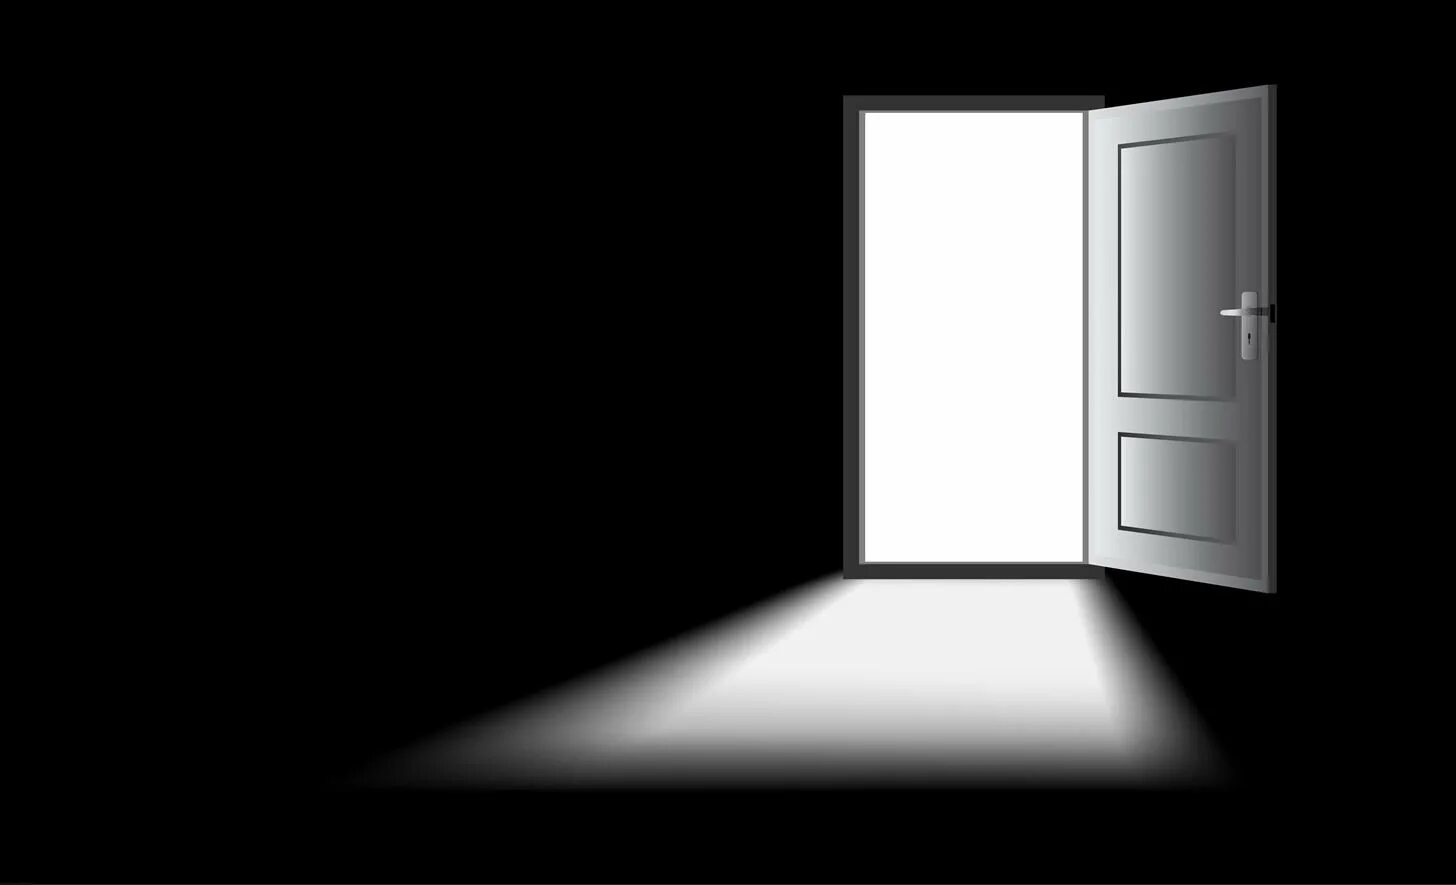 Открытая дверь вк. Открытая дверь. Открытая дверь в темную комнату. Темная комната с открытой дверью. Дверь в темную комнату.